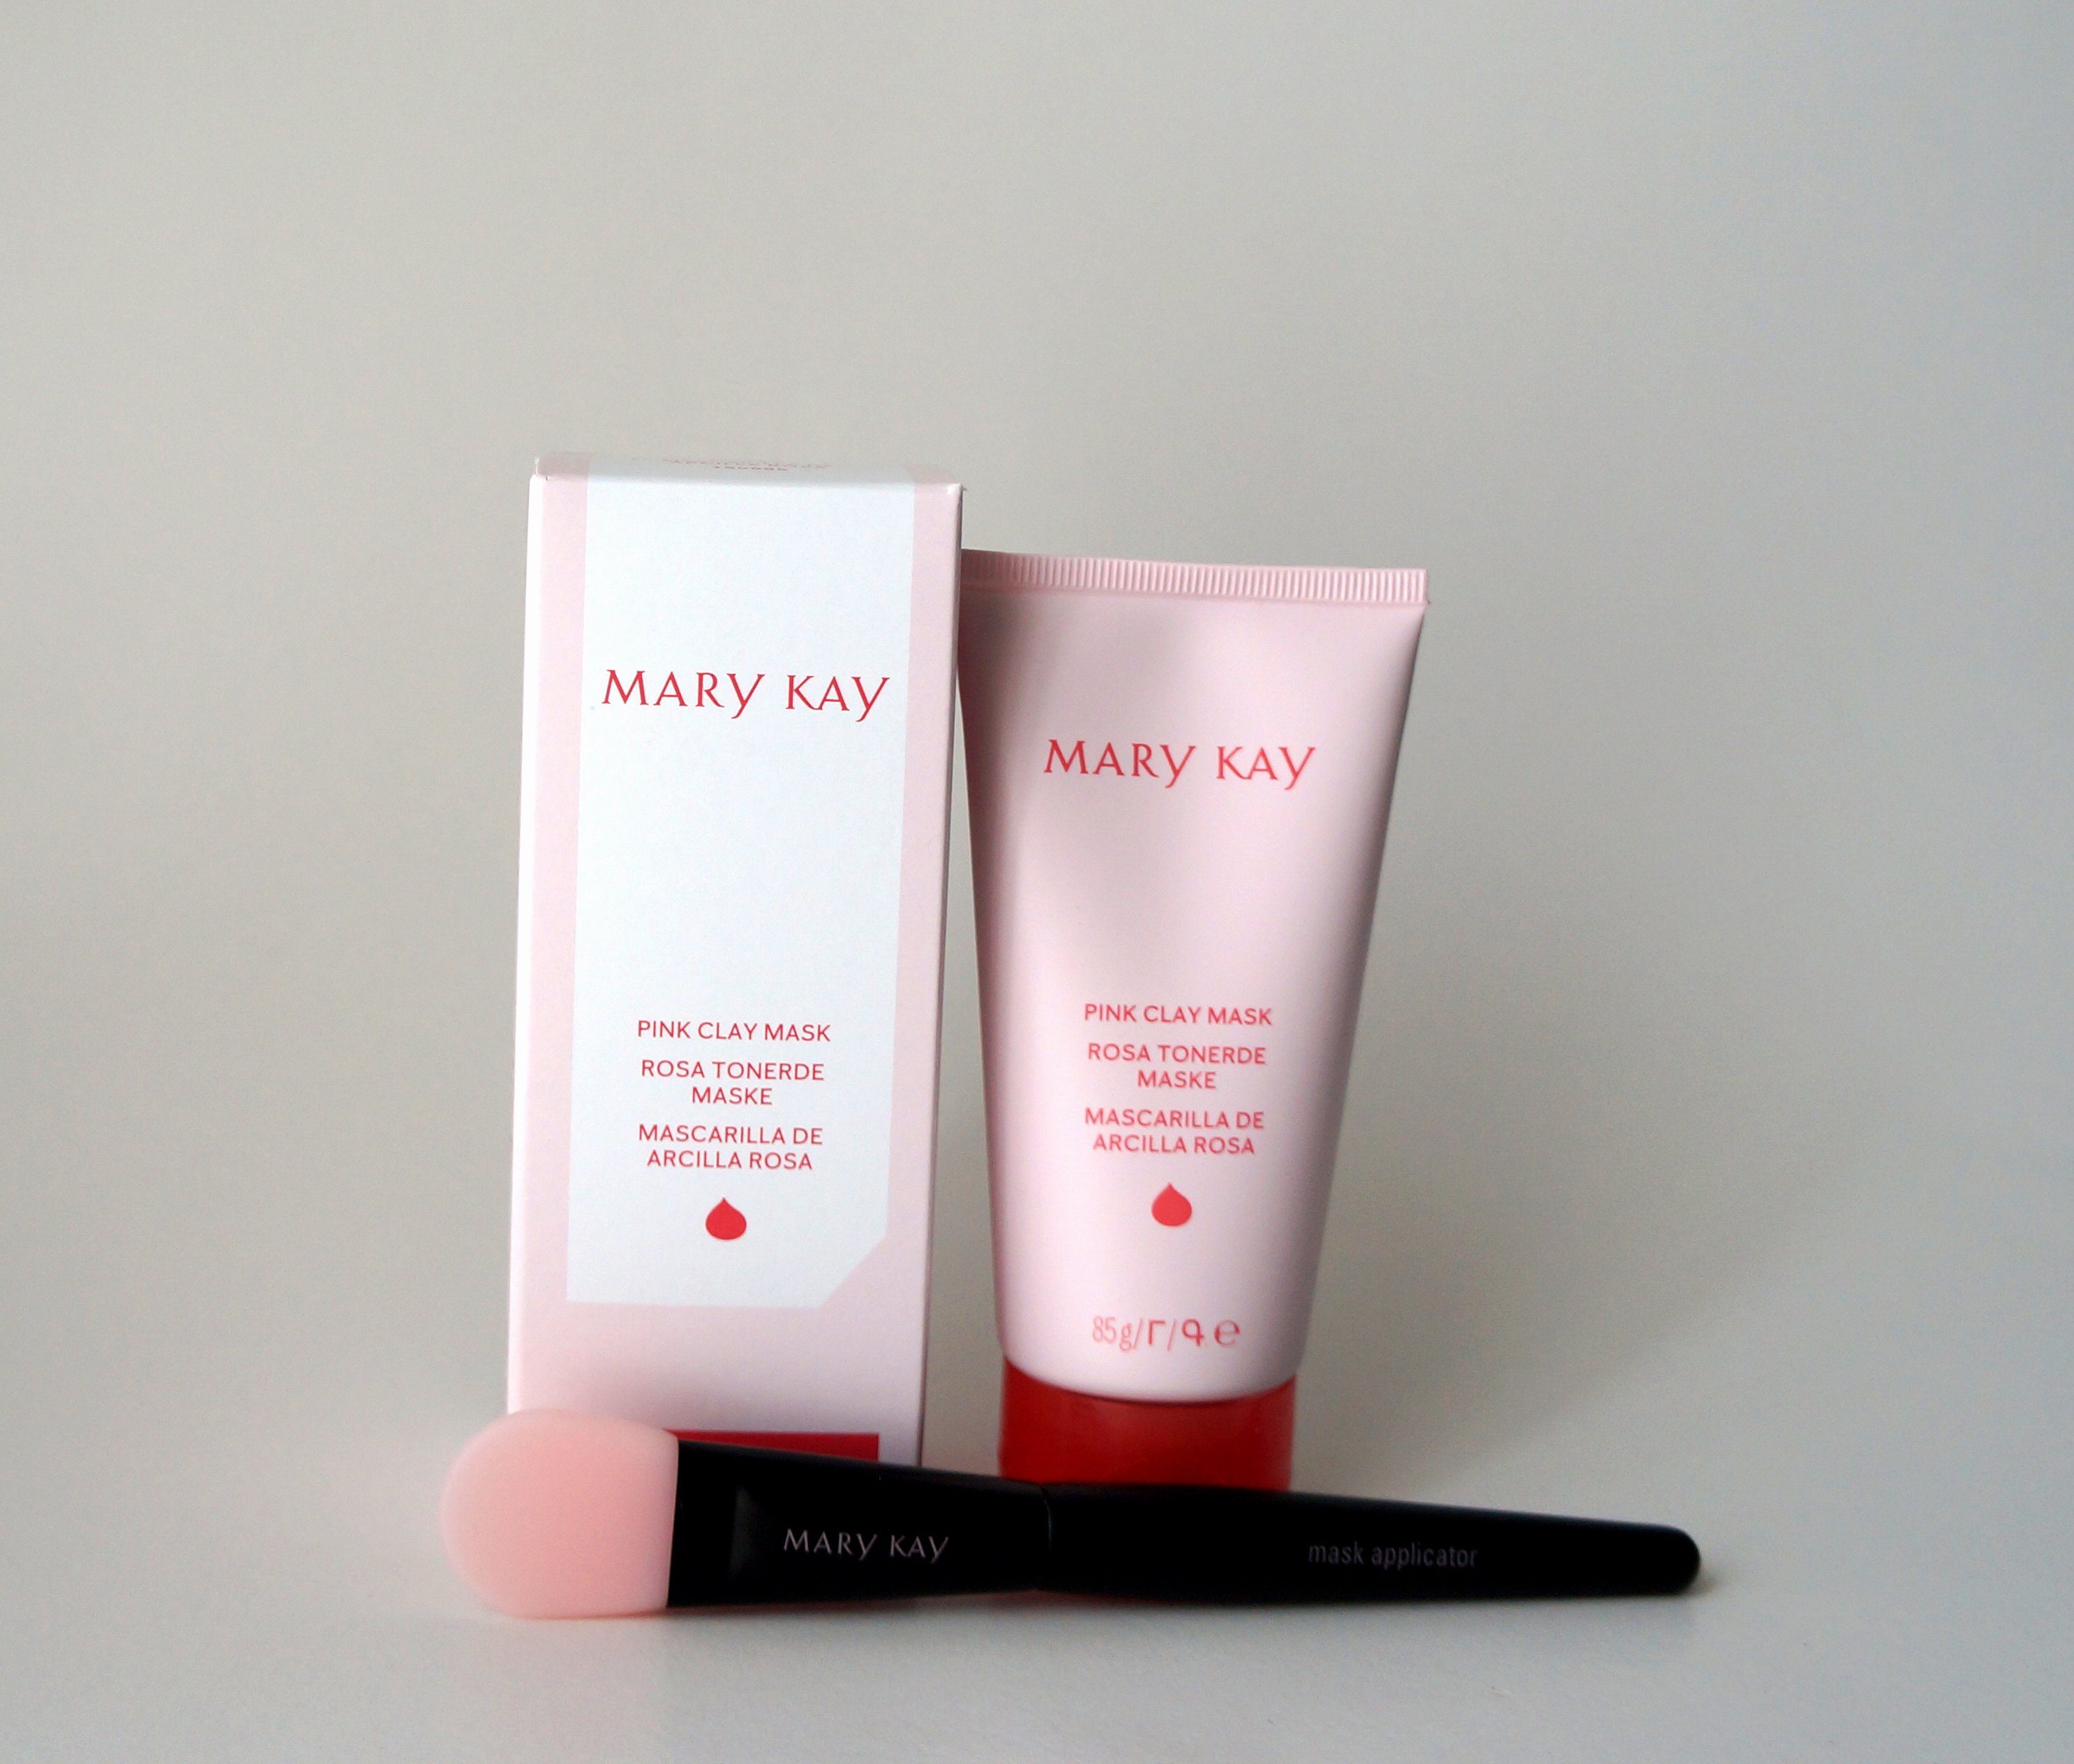 Mary Kay Gesichtsmaske Mary Kay Pink Clay Mask Rosa Tonerde Maske incl.Spachtel 85g